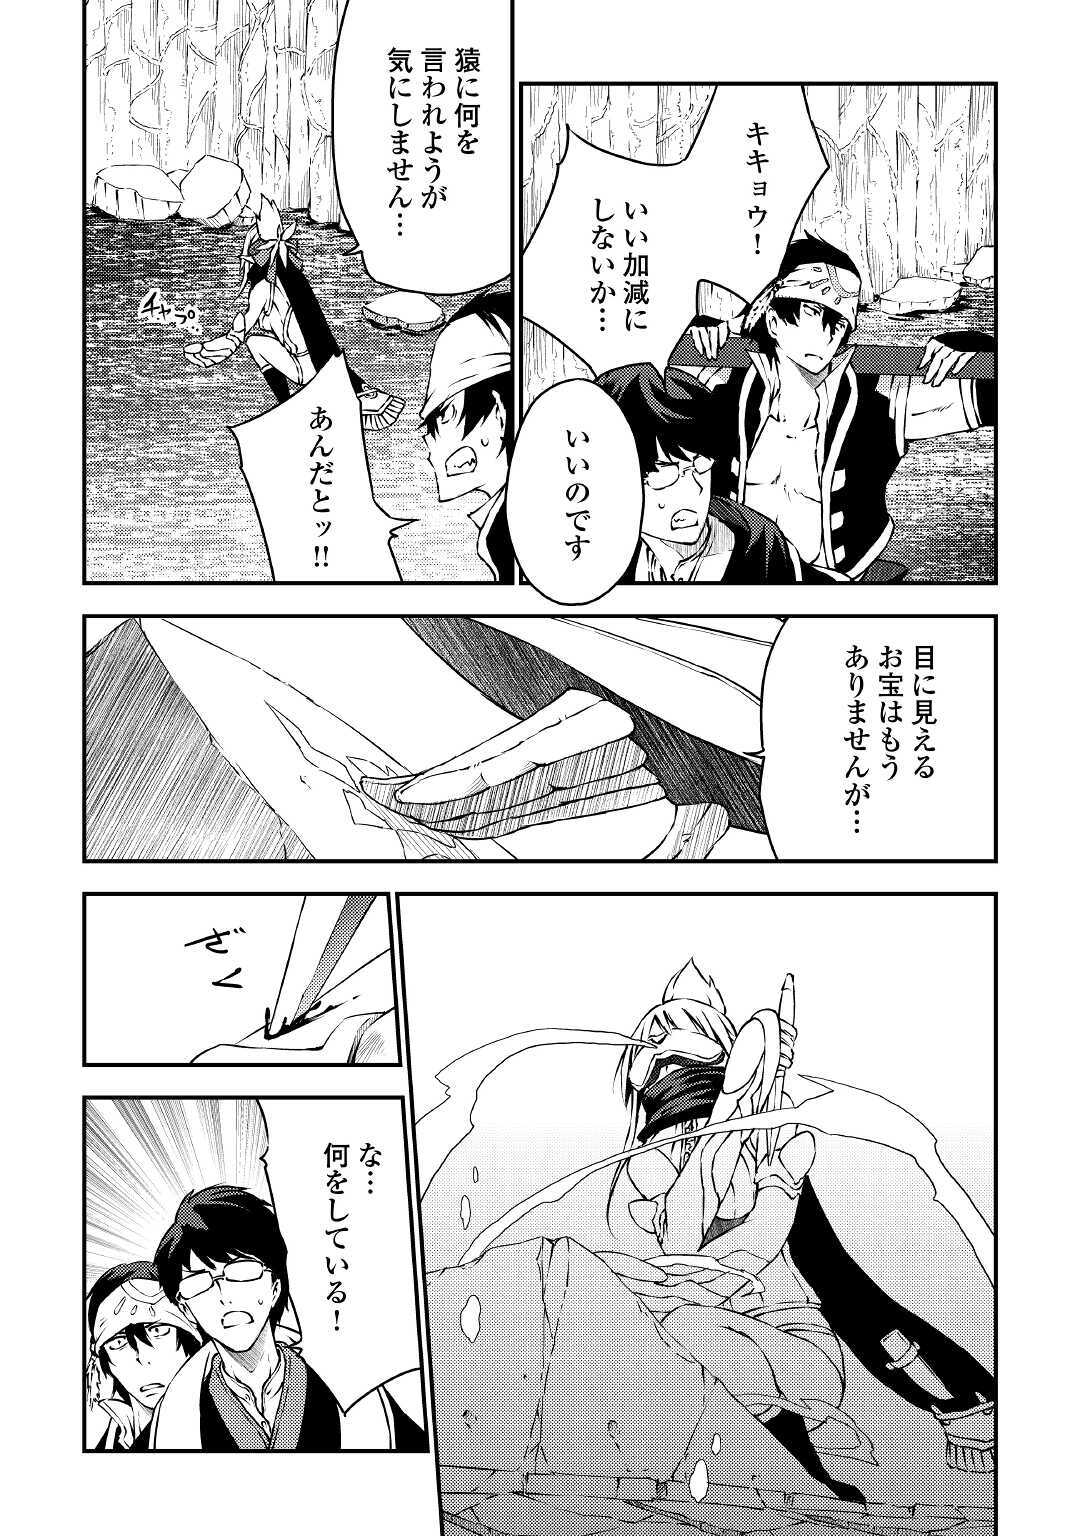 Yuusha no Mago to Maou no Musume - Chapter 26 - Page 3